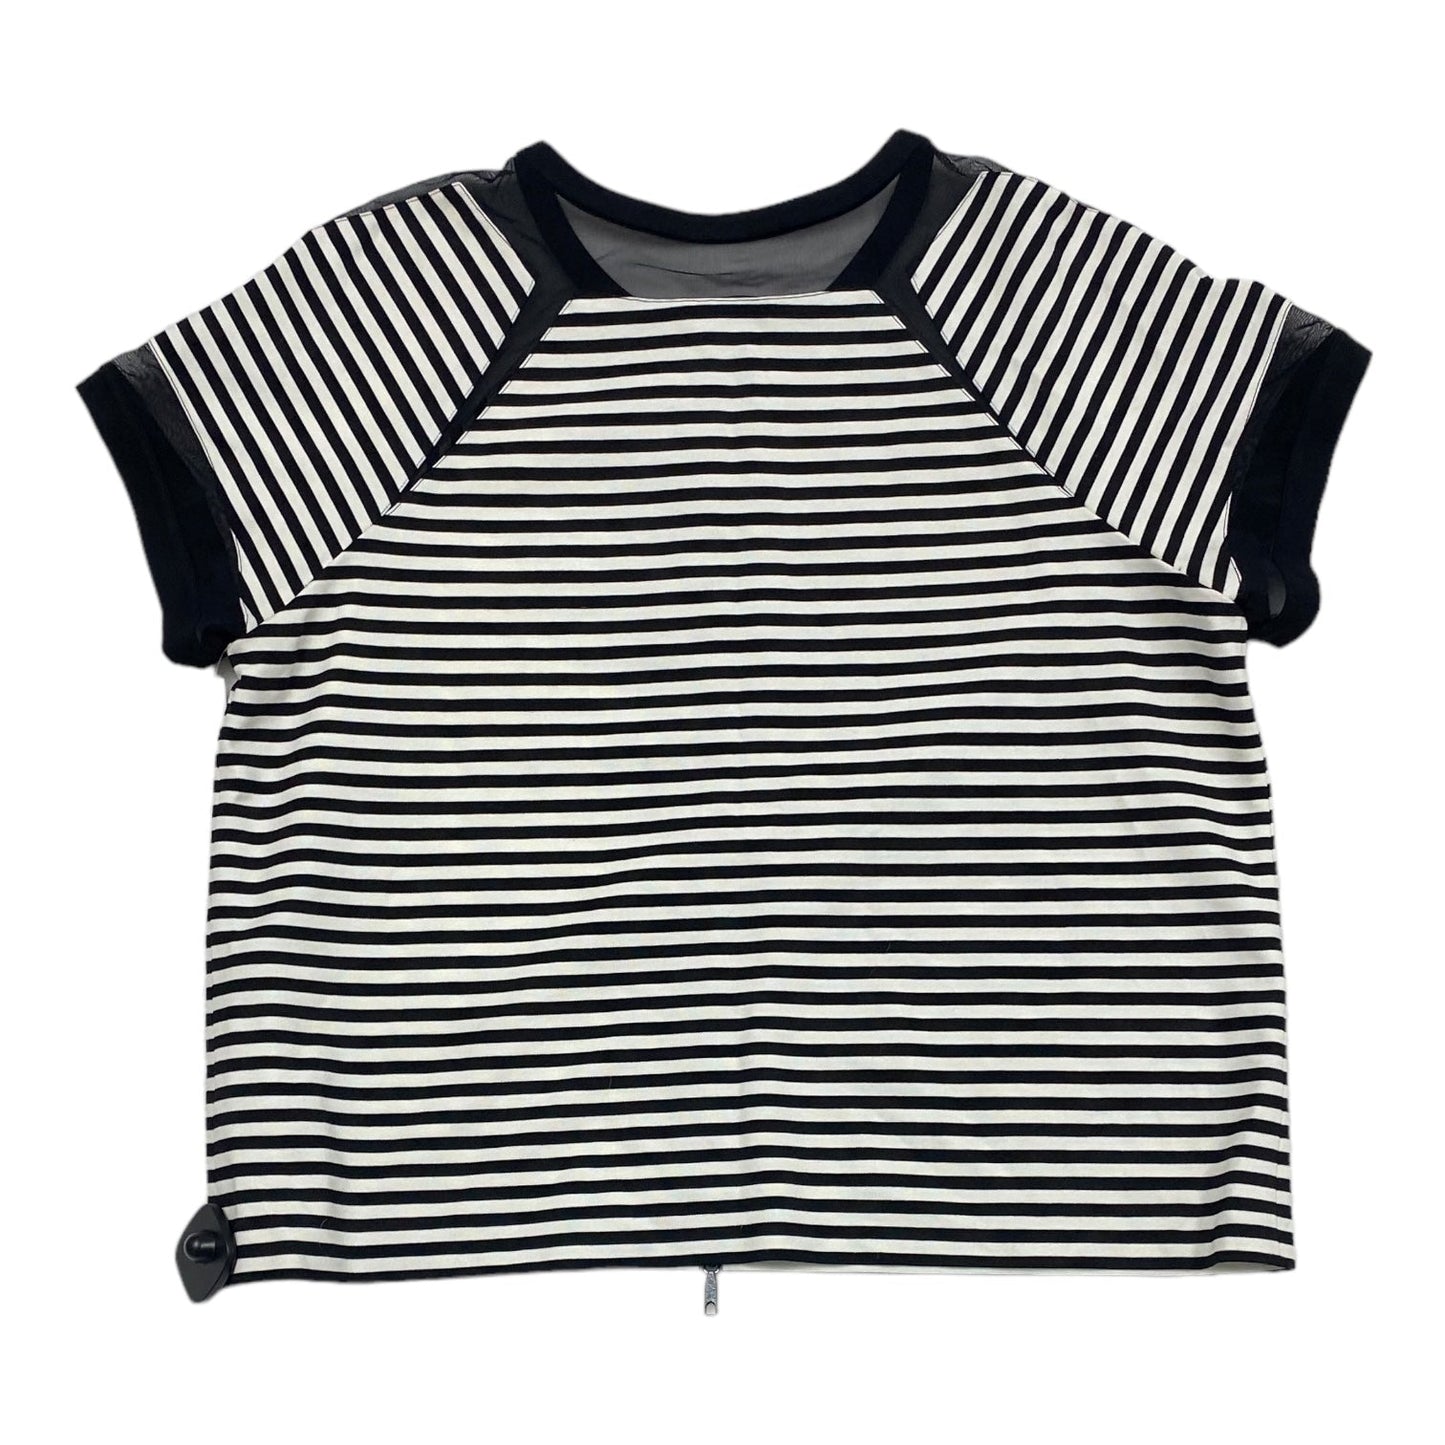 Striped Pattern Top Short Sleeve Designer Lafayette 148, Size Xl